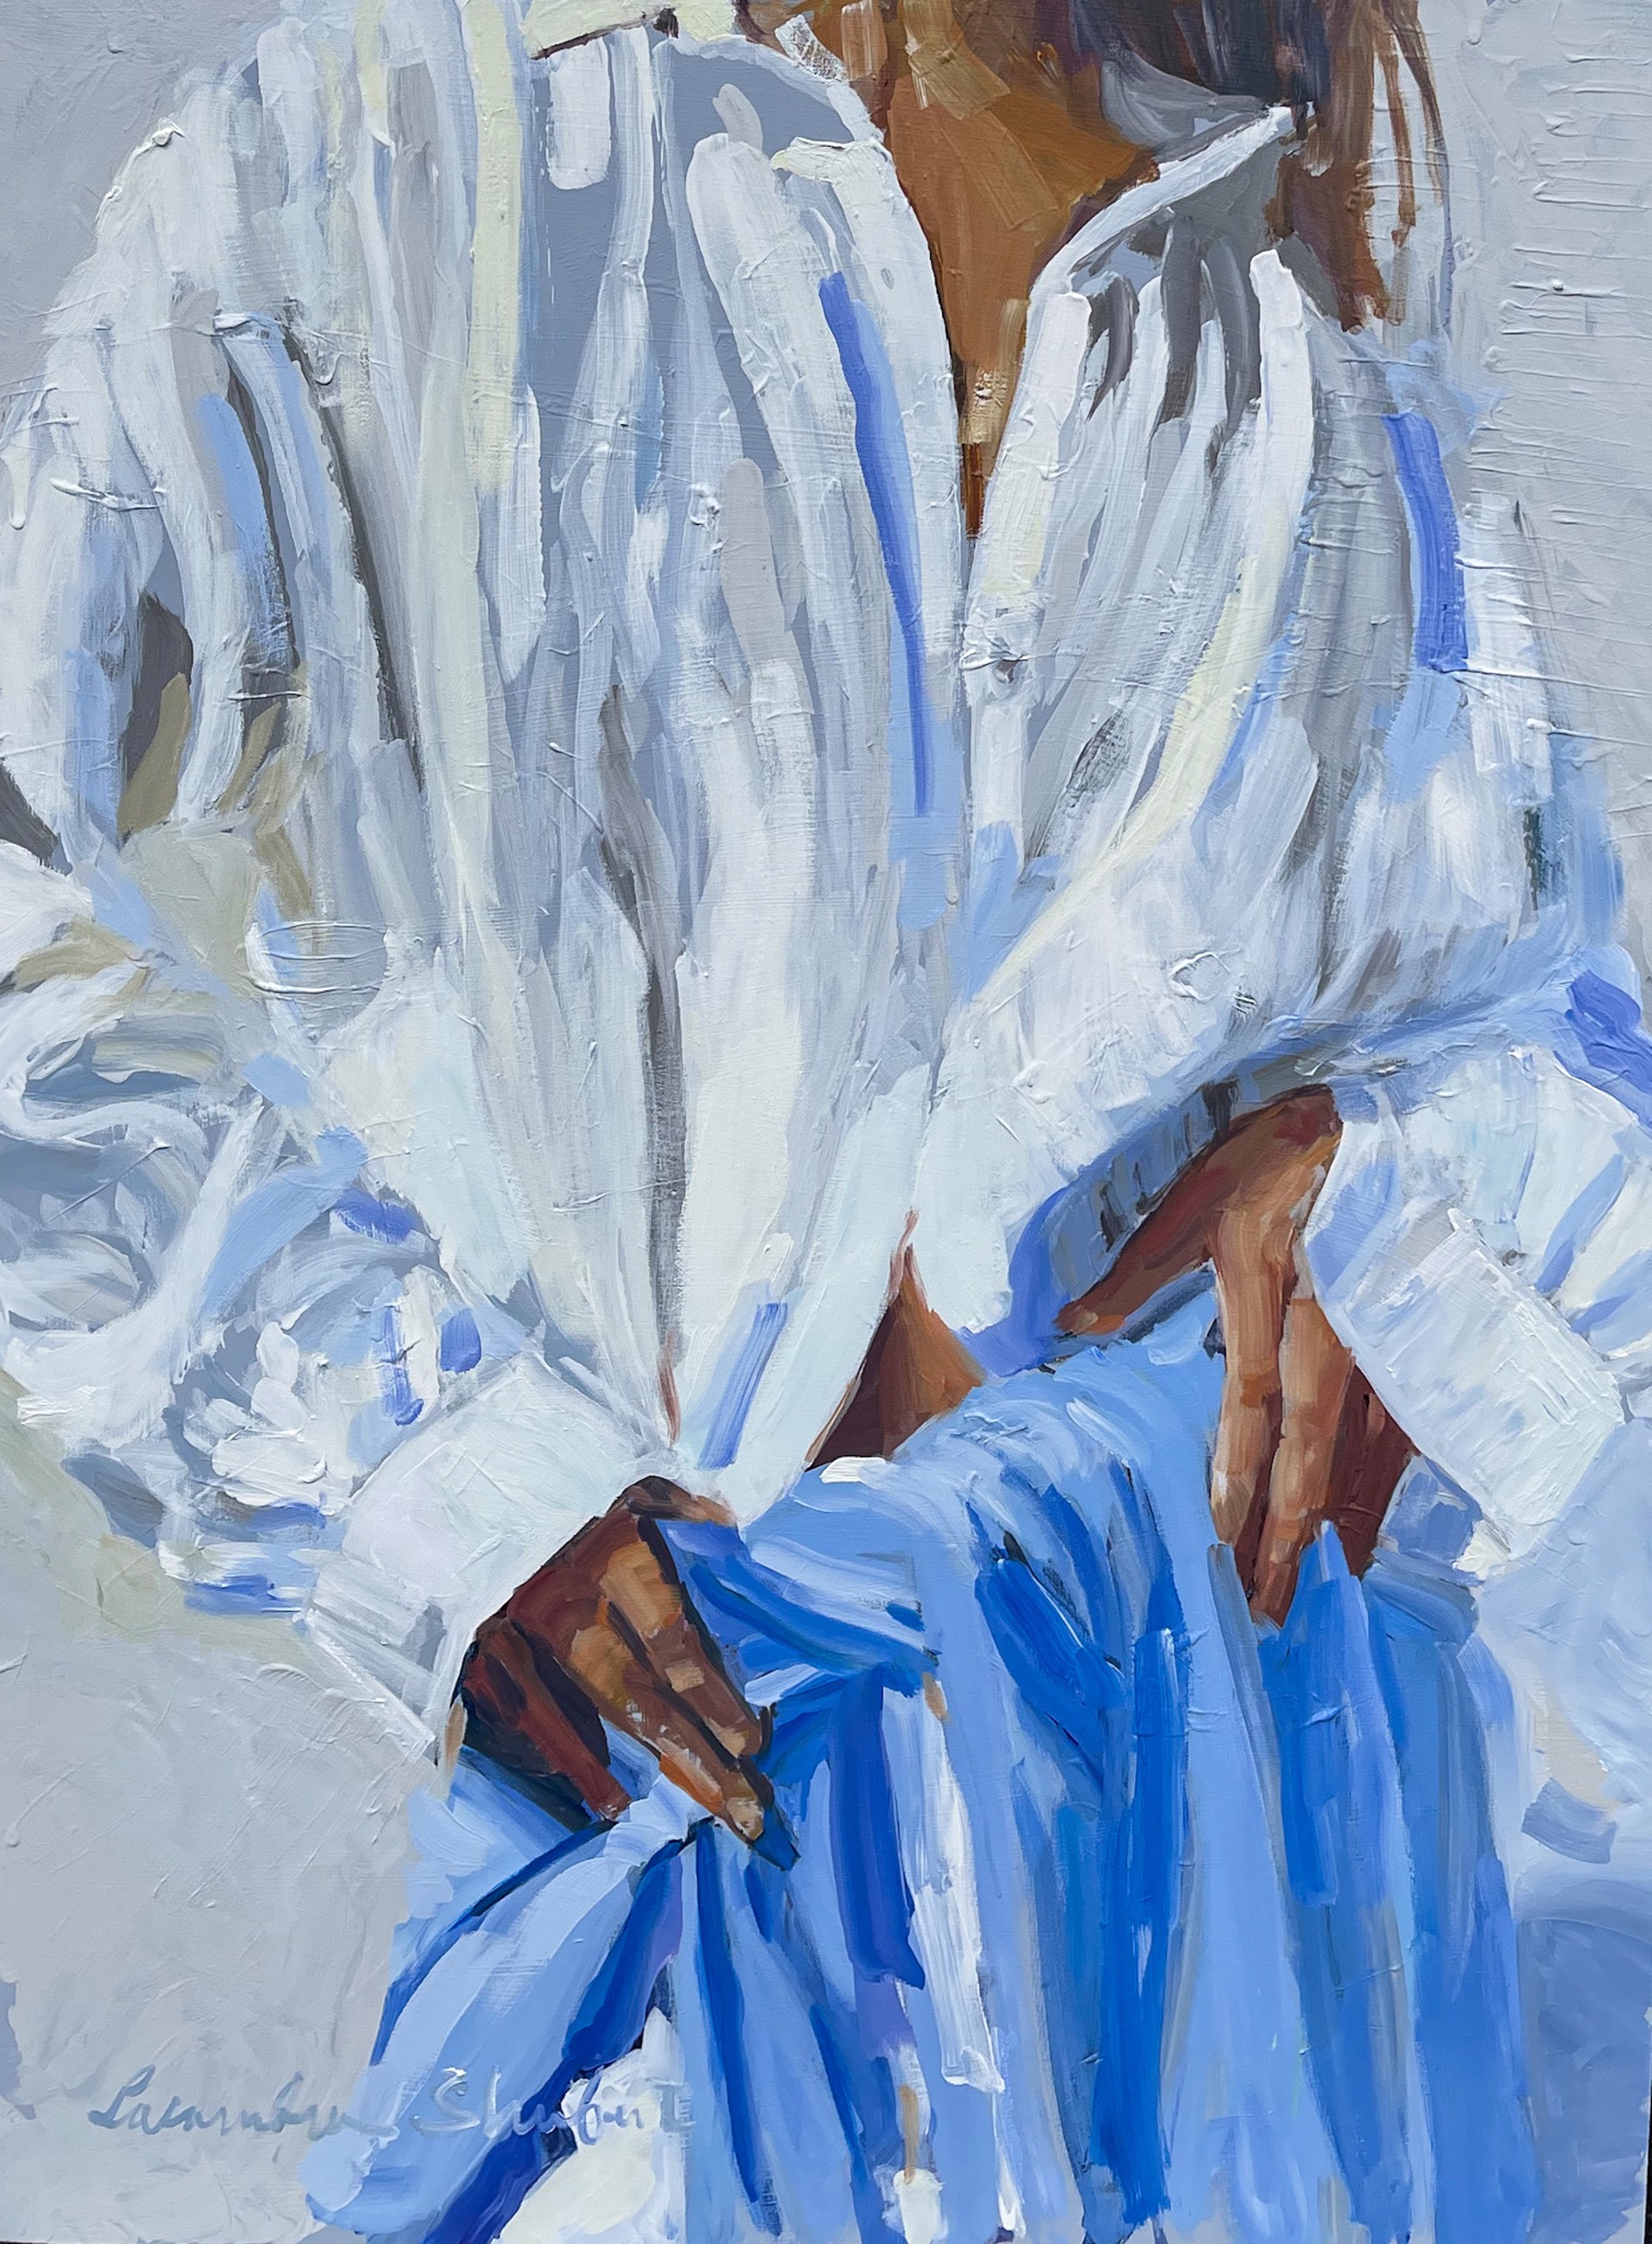 White Dress Blue Shirt by Laura Lacambra Shubert